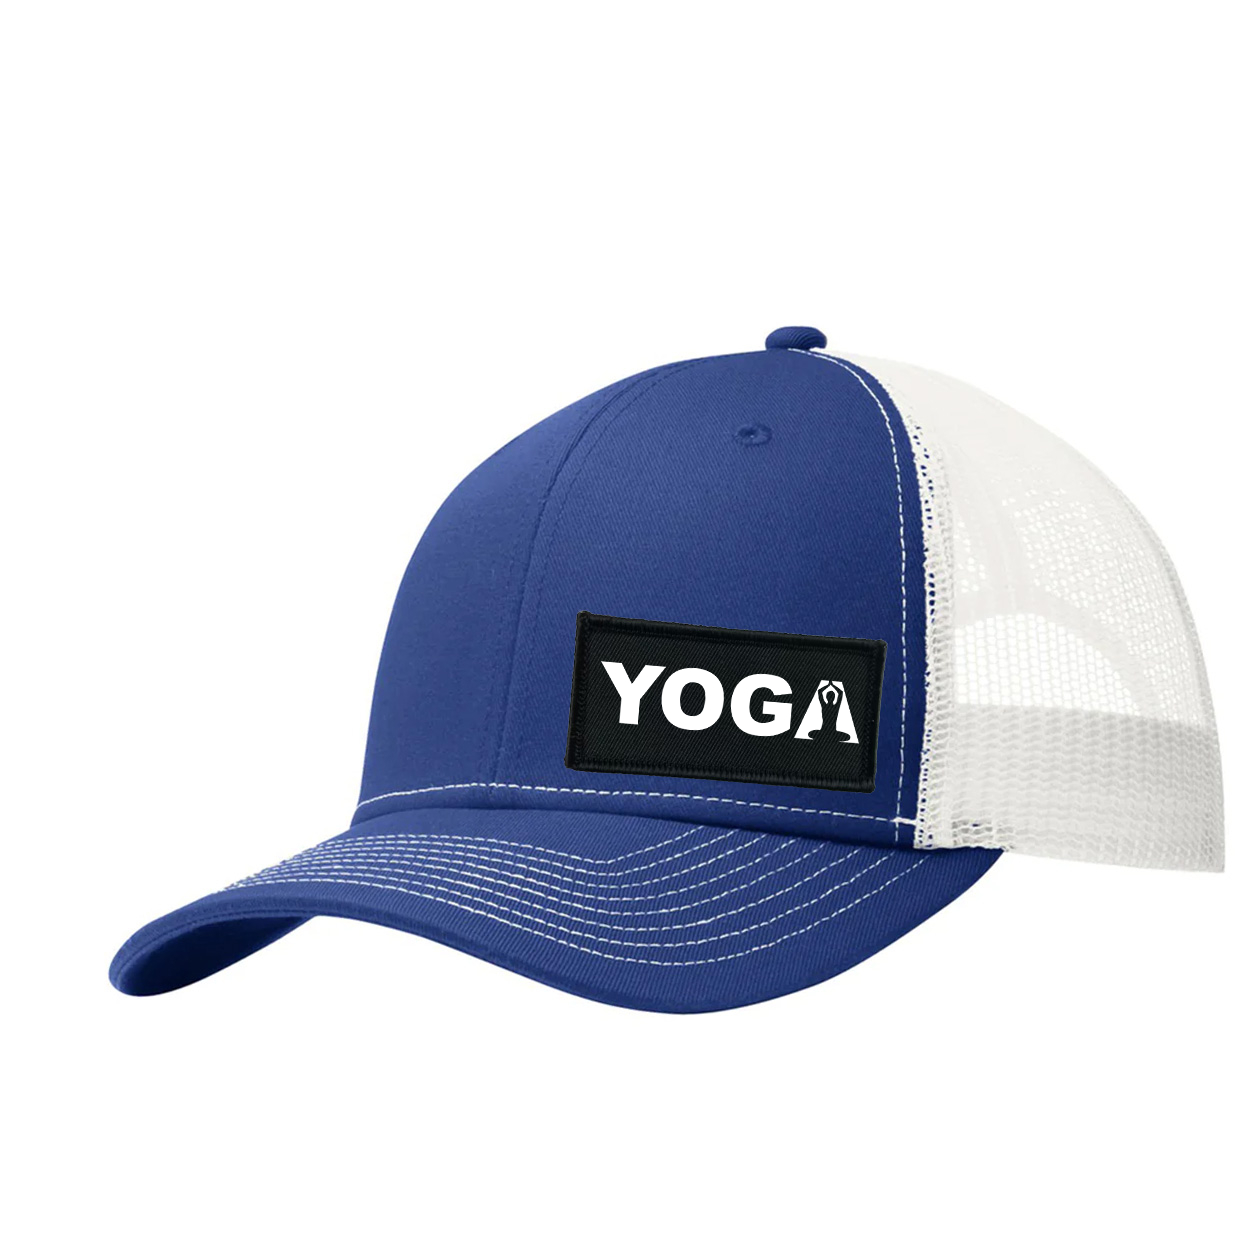 Yoga Meditation Logo Night Out Woven Patch Snapback Trucker Hat Dark Royal/White 